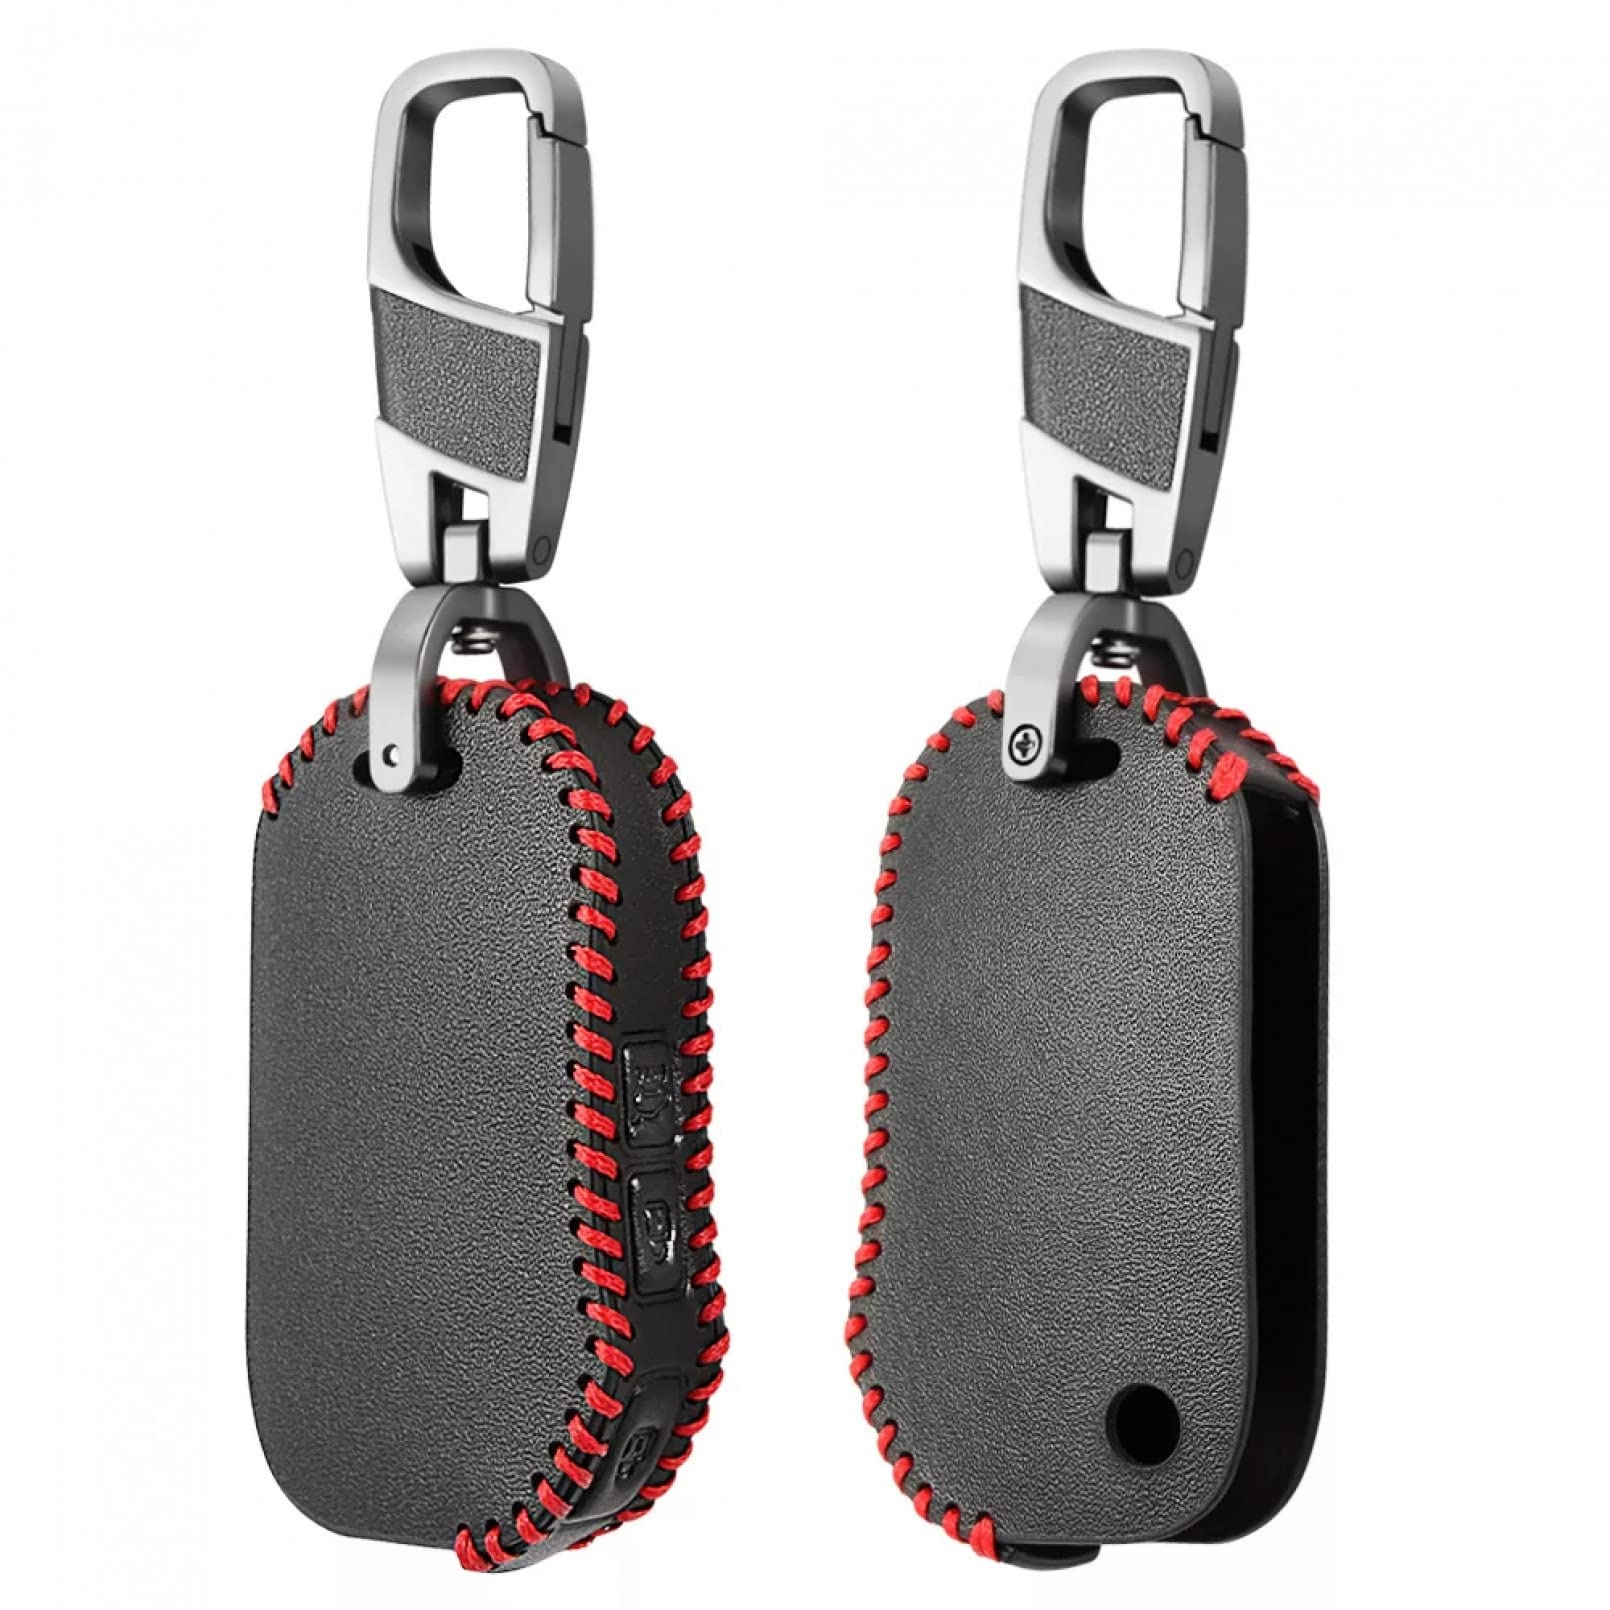 Leder Auto Flip Key Case Remote Protector Cover Tasche Shell Schlüsselanhänger 3 Tasten für Kia Sportage R Stinger Ceed CD Sorento Strong Cerato 2017 2018 2019